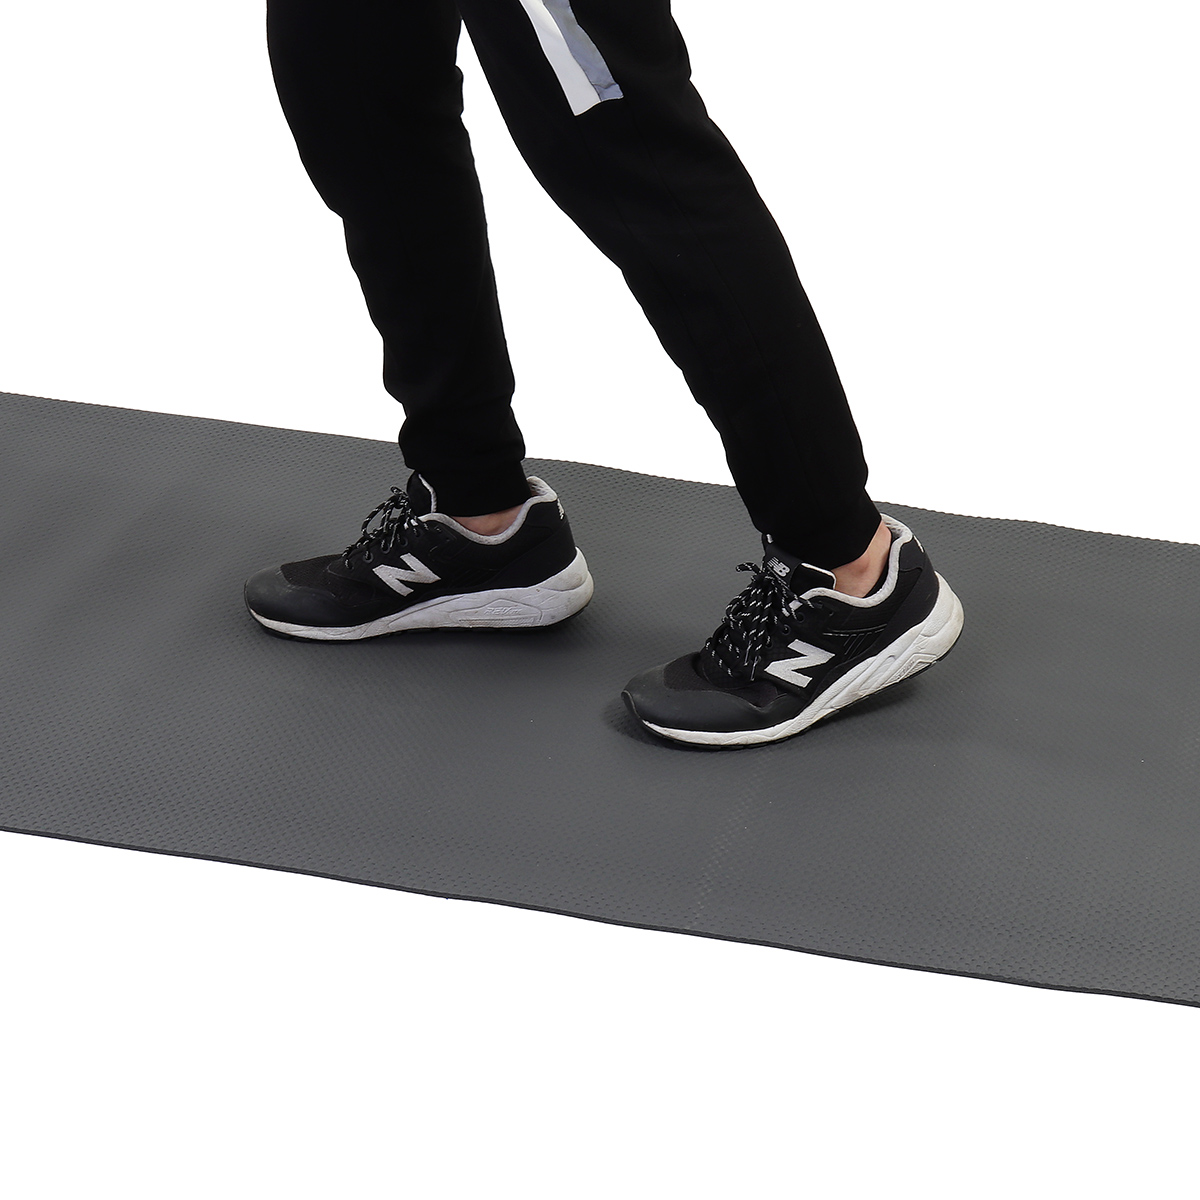 180x75cm-Exercise-Mat-Yoga-Mats-Gym-Equipment-Pad-For-Treadmill-Protect-Floor-1353184-7